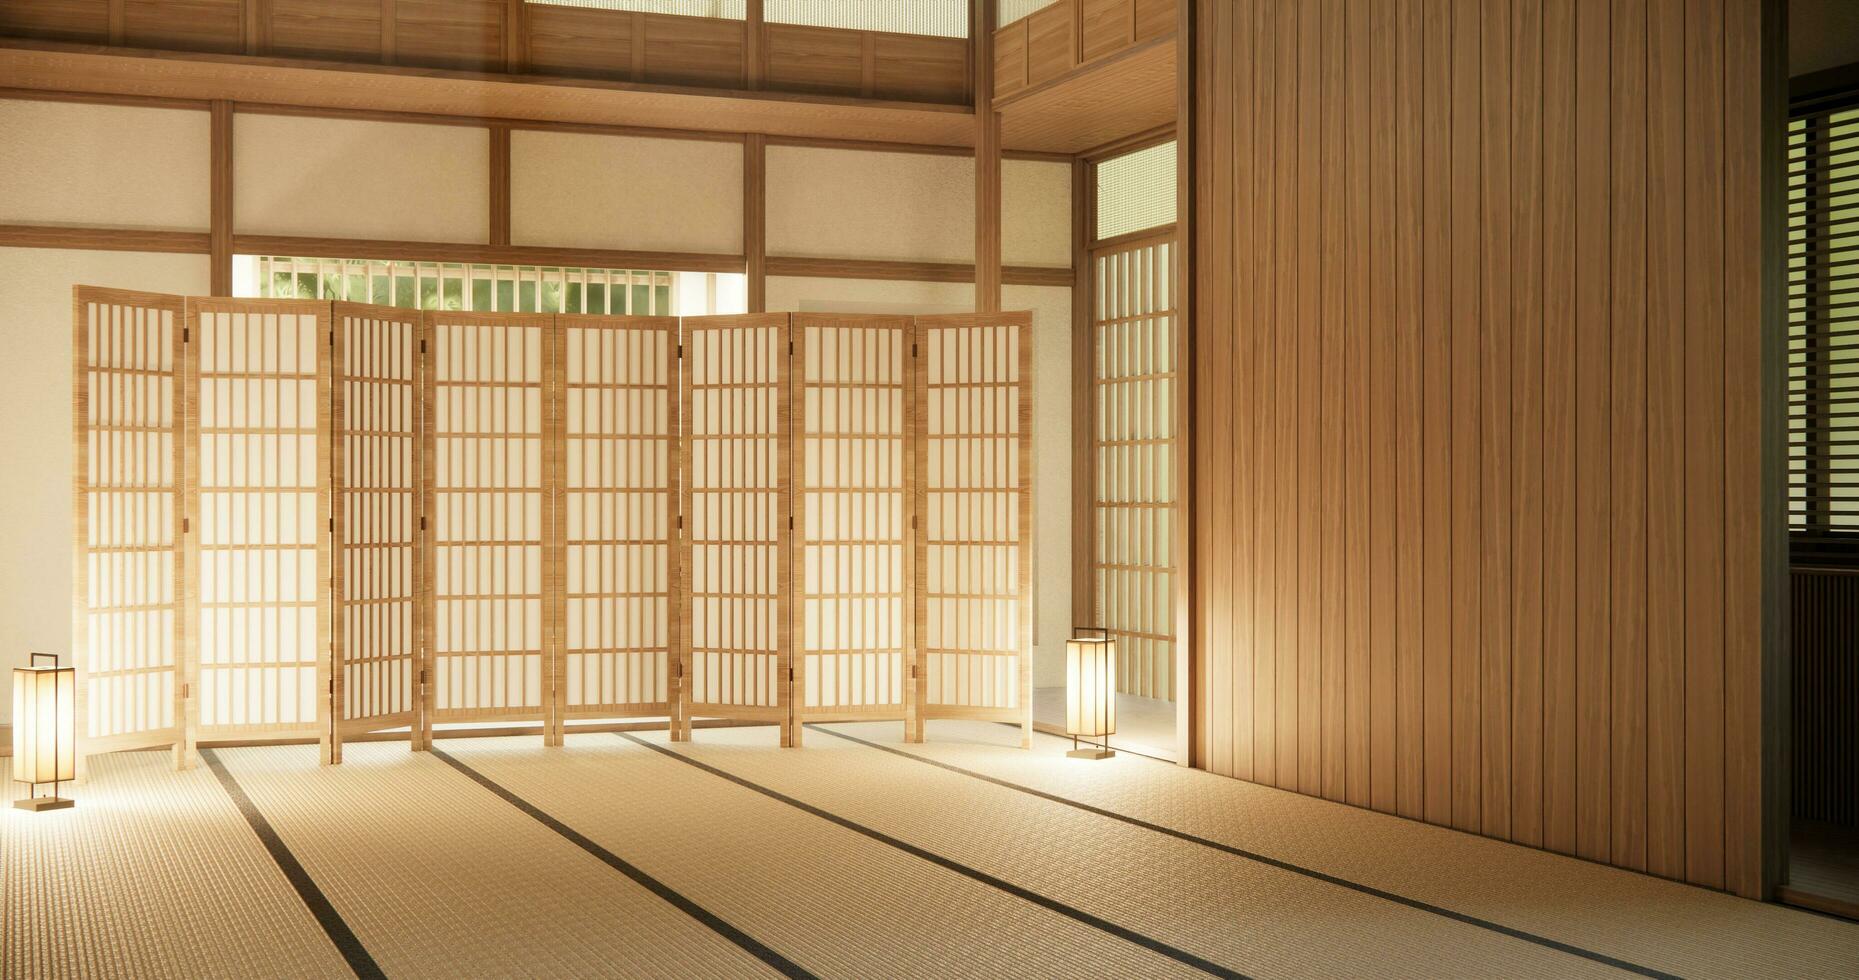 Interior, Empty room and tatami mat floor room japanese style. photo